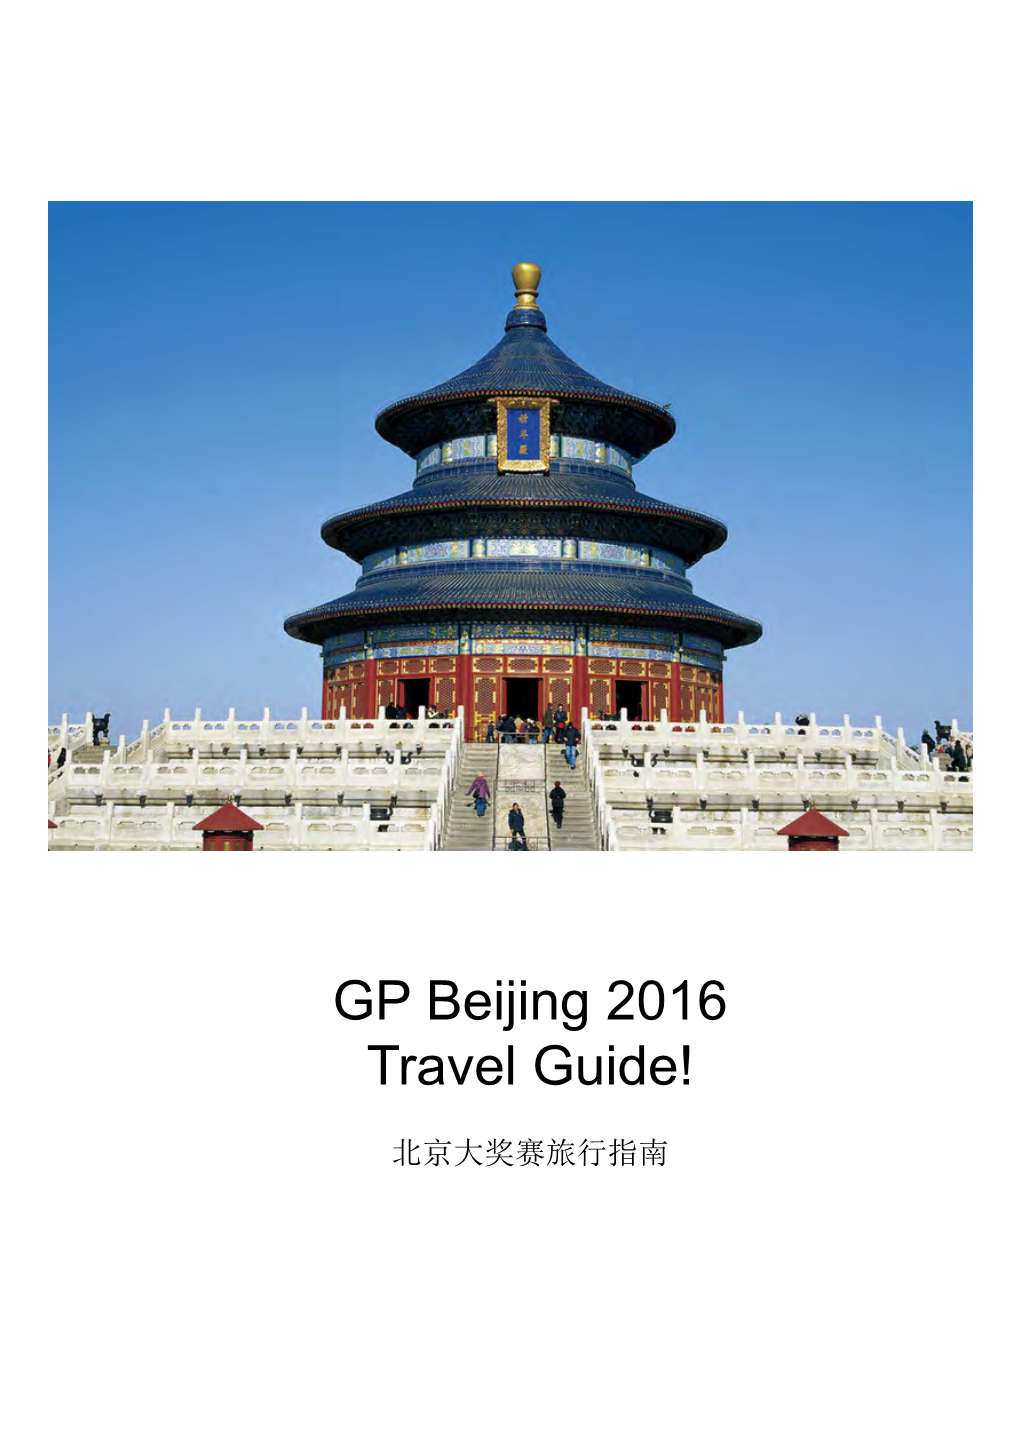 GP Beijing 2016 Travel Guide!